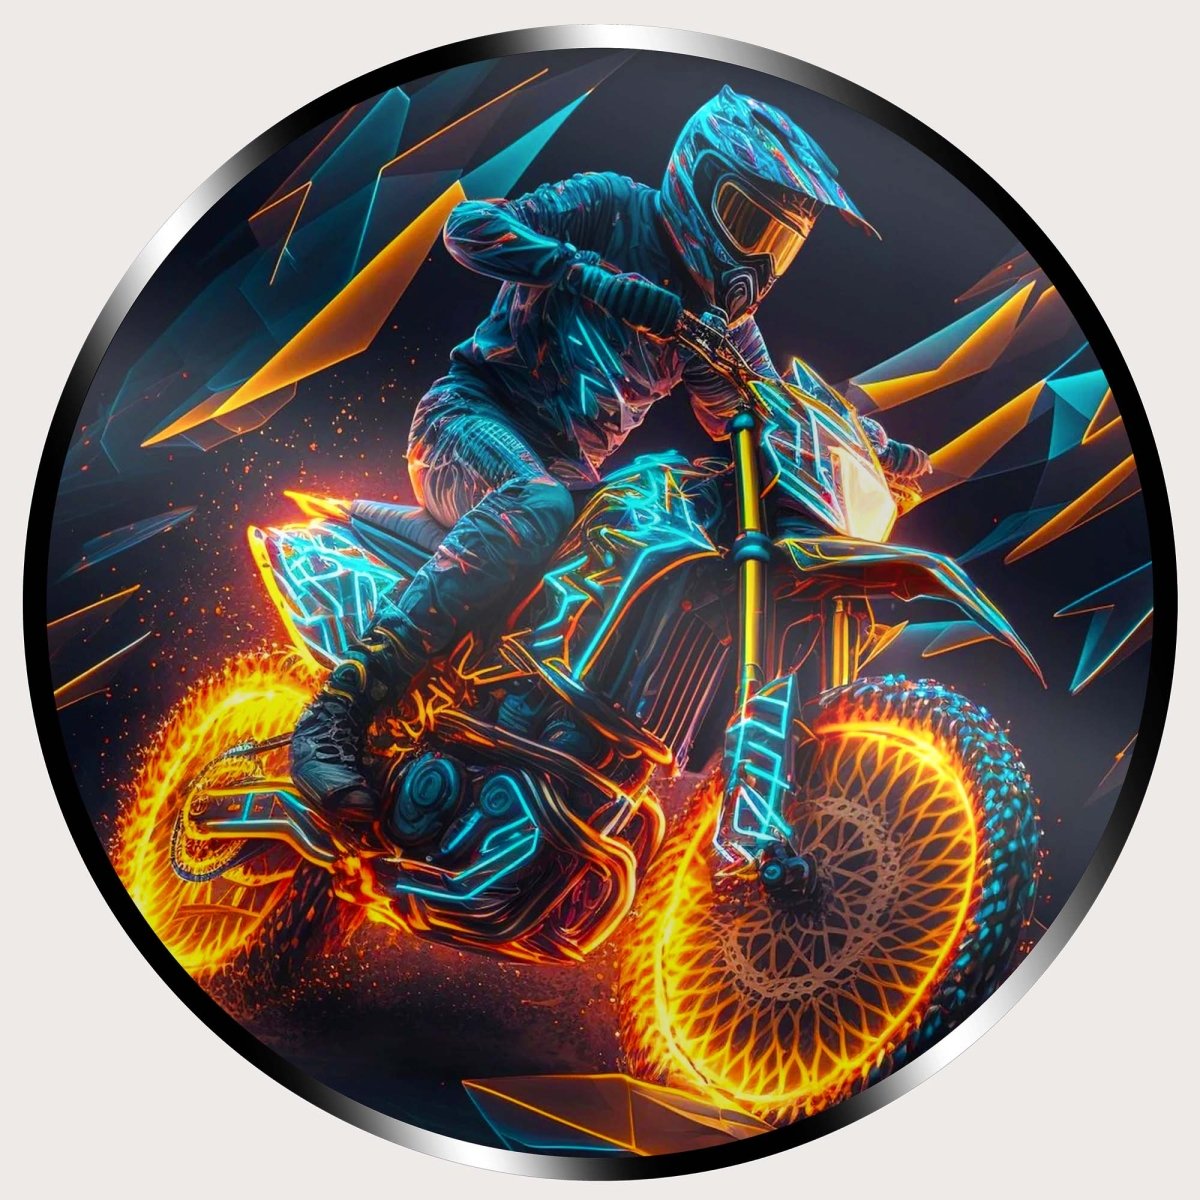 Illuminated Wall Art - Extreme Motorcycle - madaboutneon